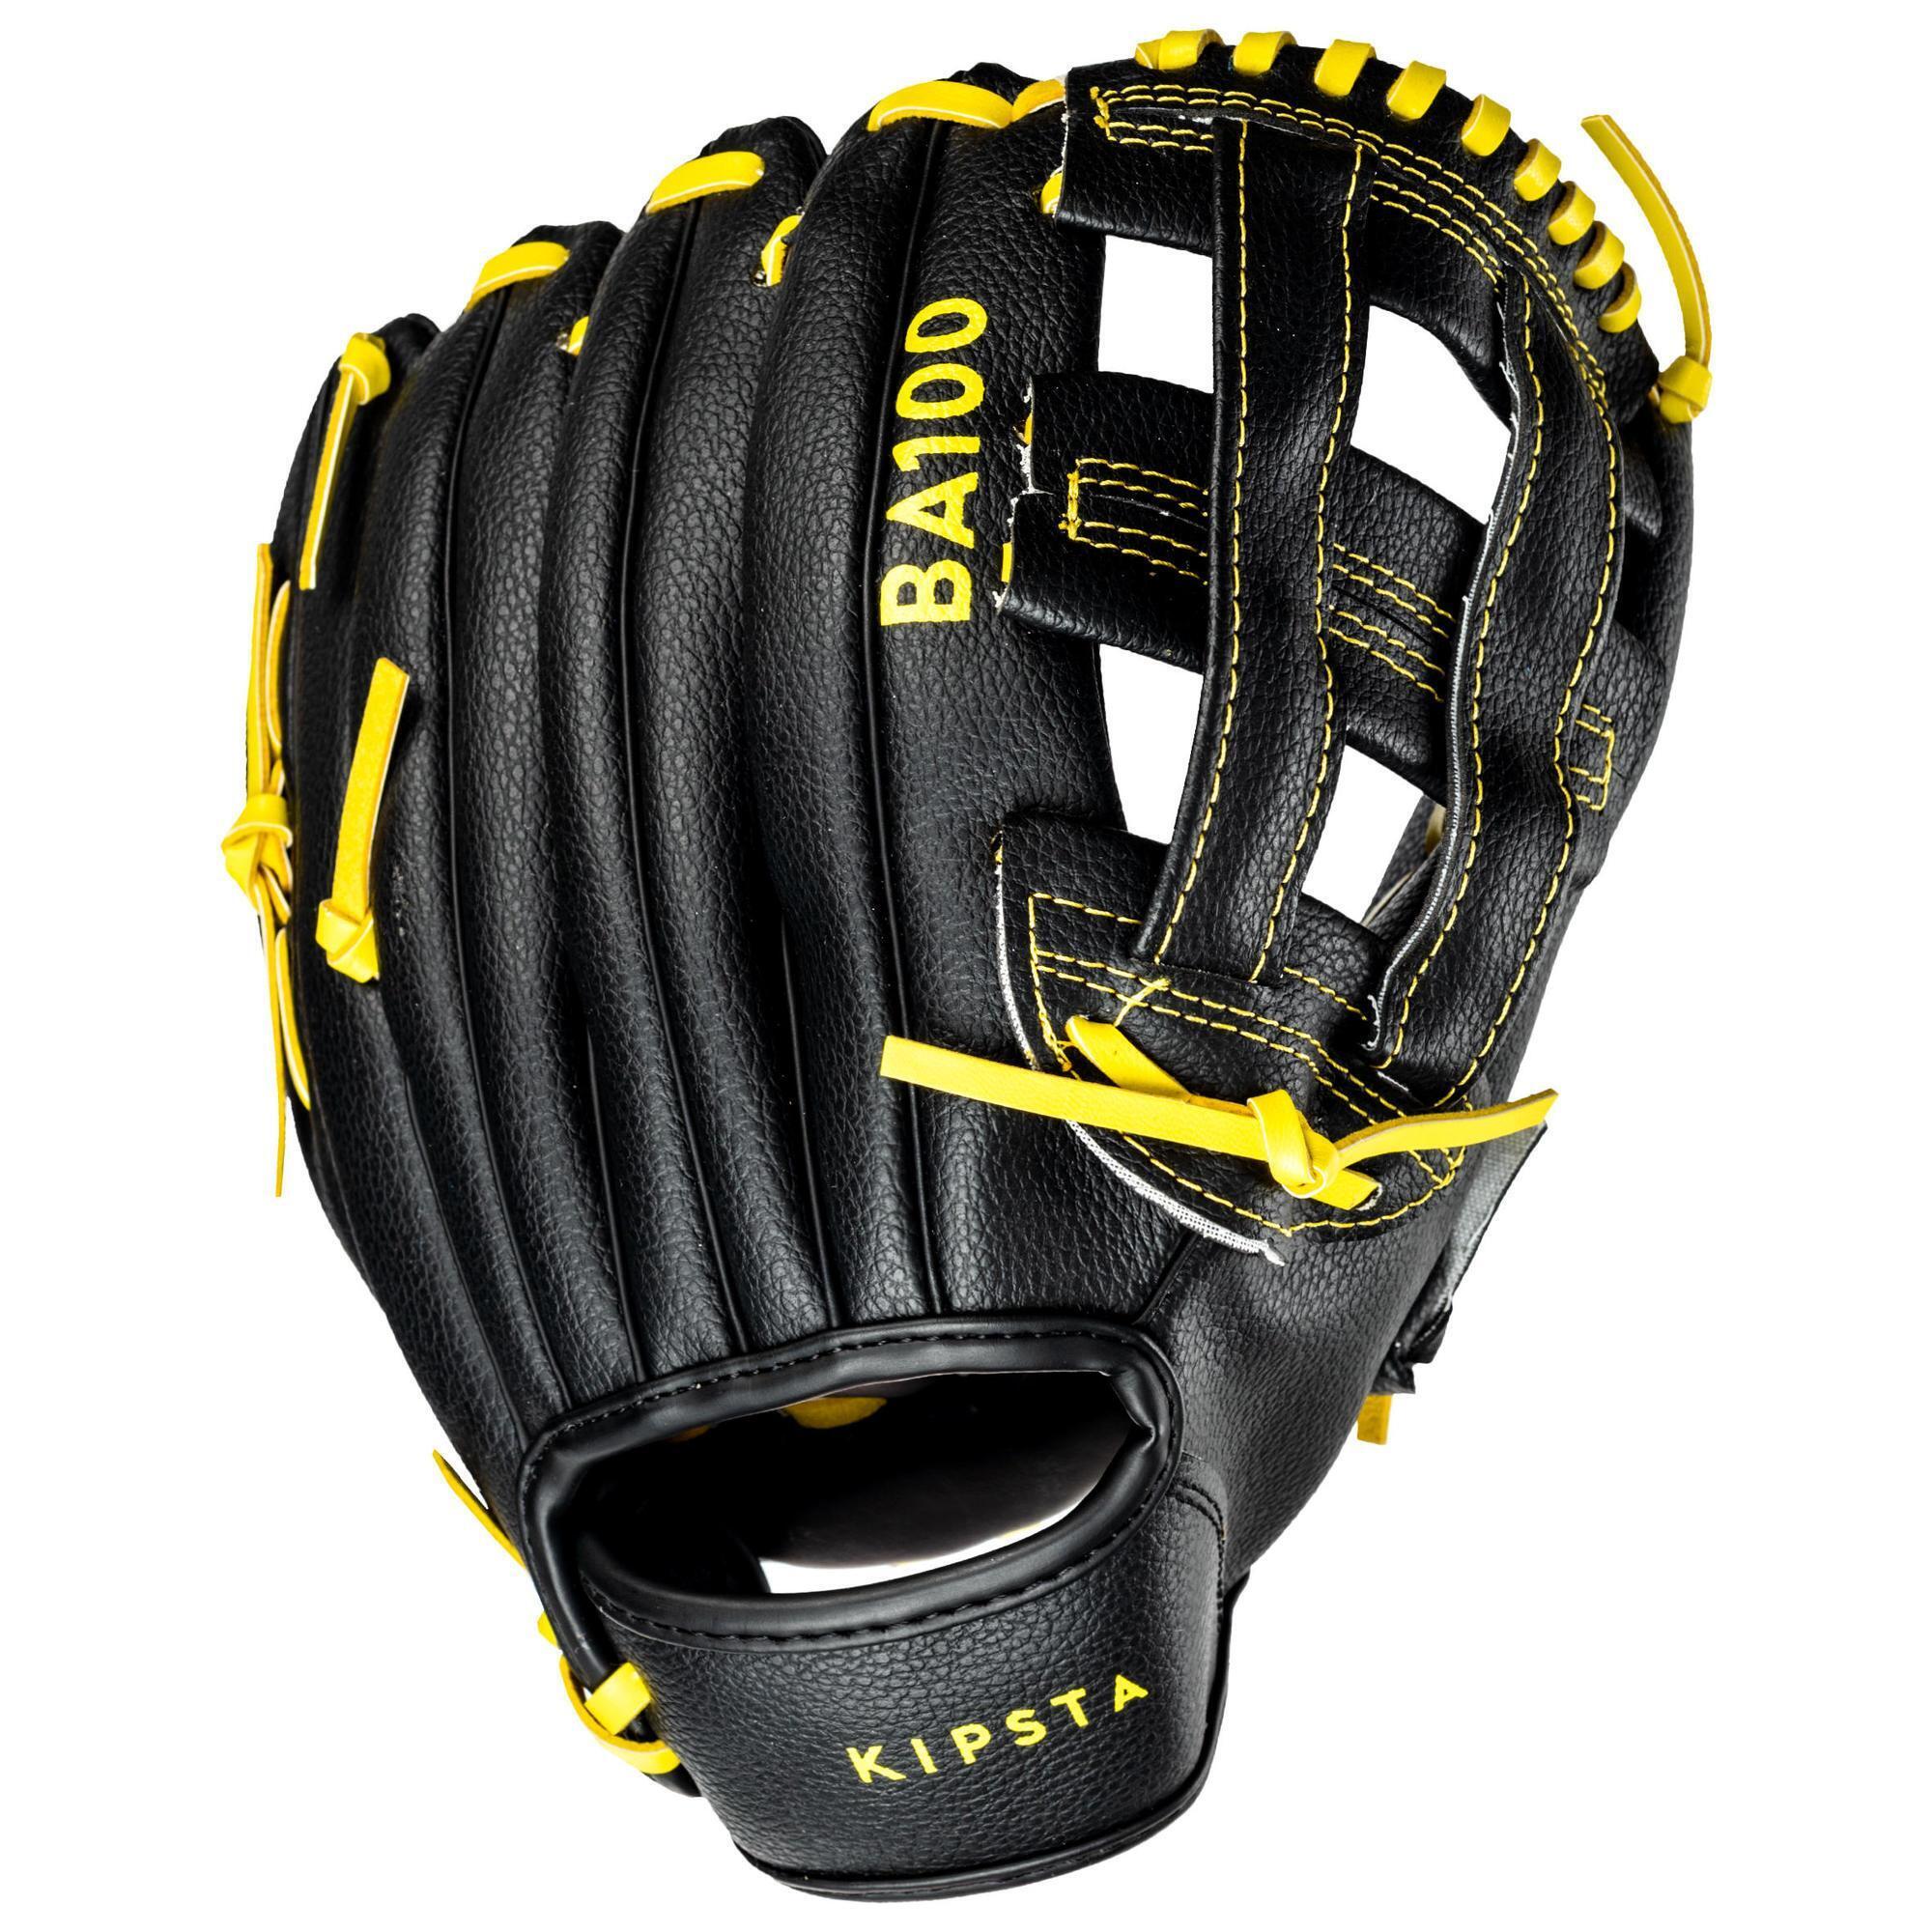 KIPSTA Baseball Glove right-hand throw kids - BA100 Yellow  Black